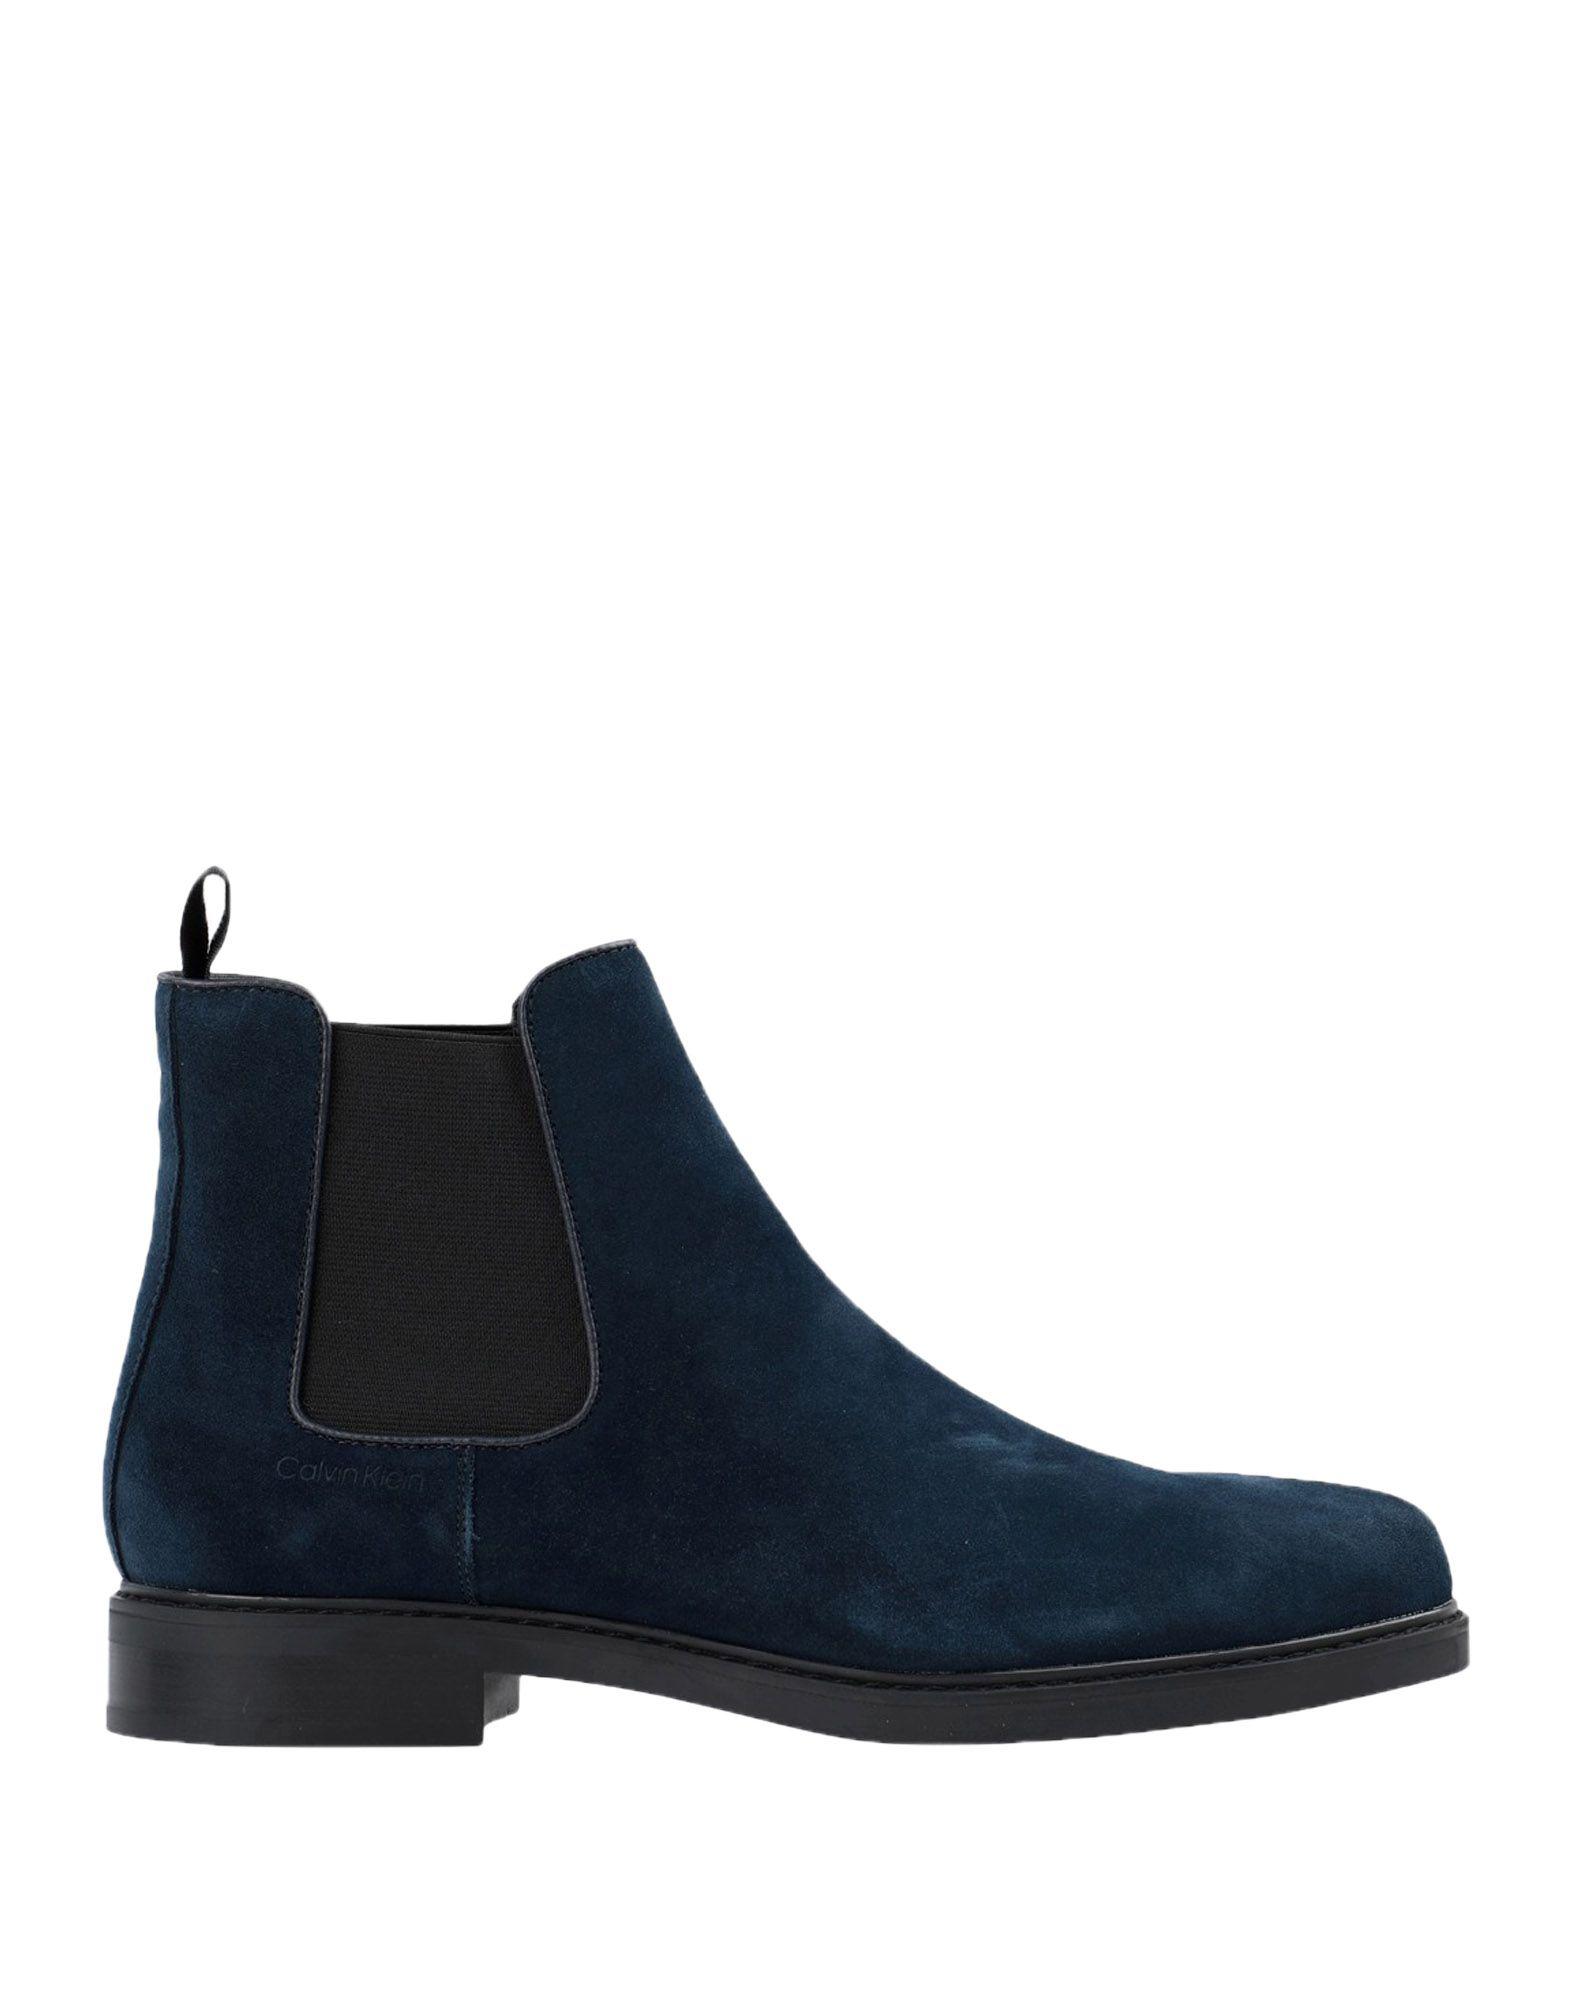 Calvin Klein Suede Ankle Boots in Dark Blue (Blue) for Men - Lyst